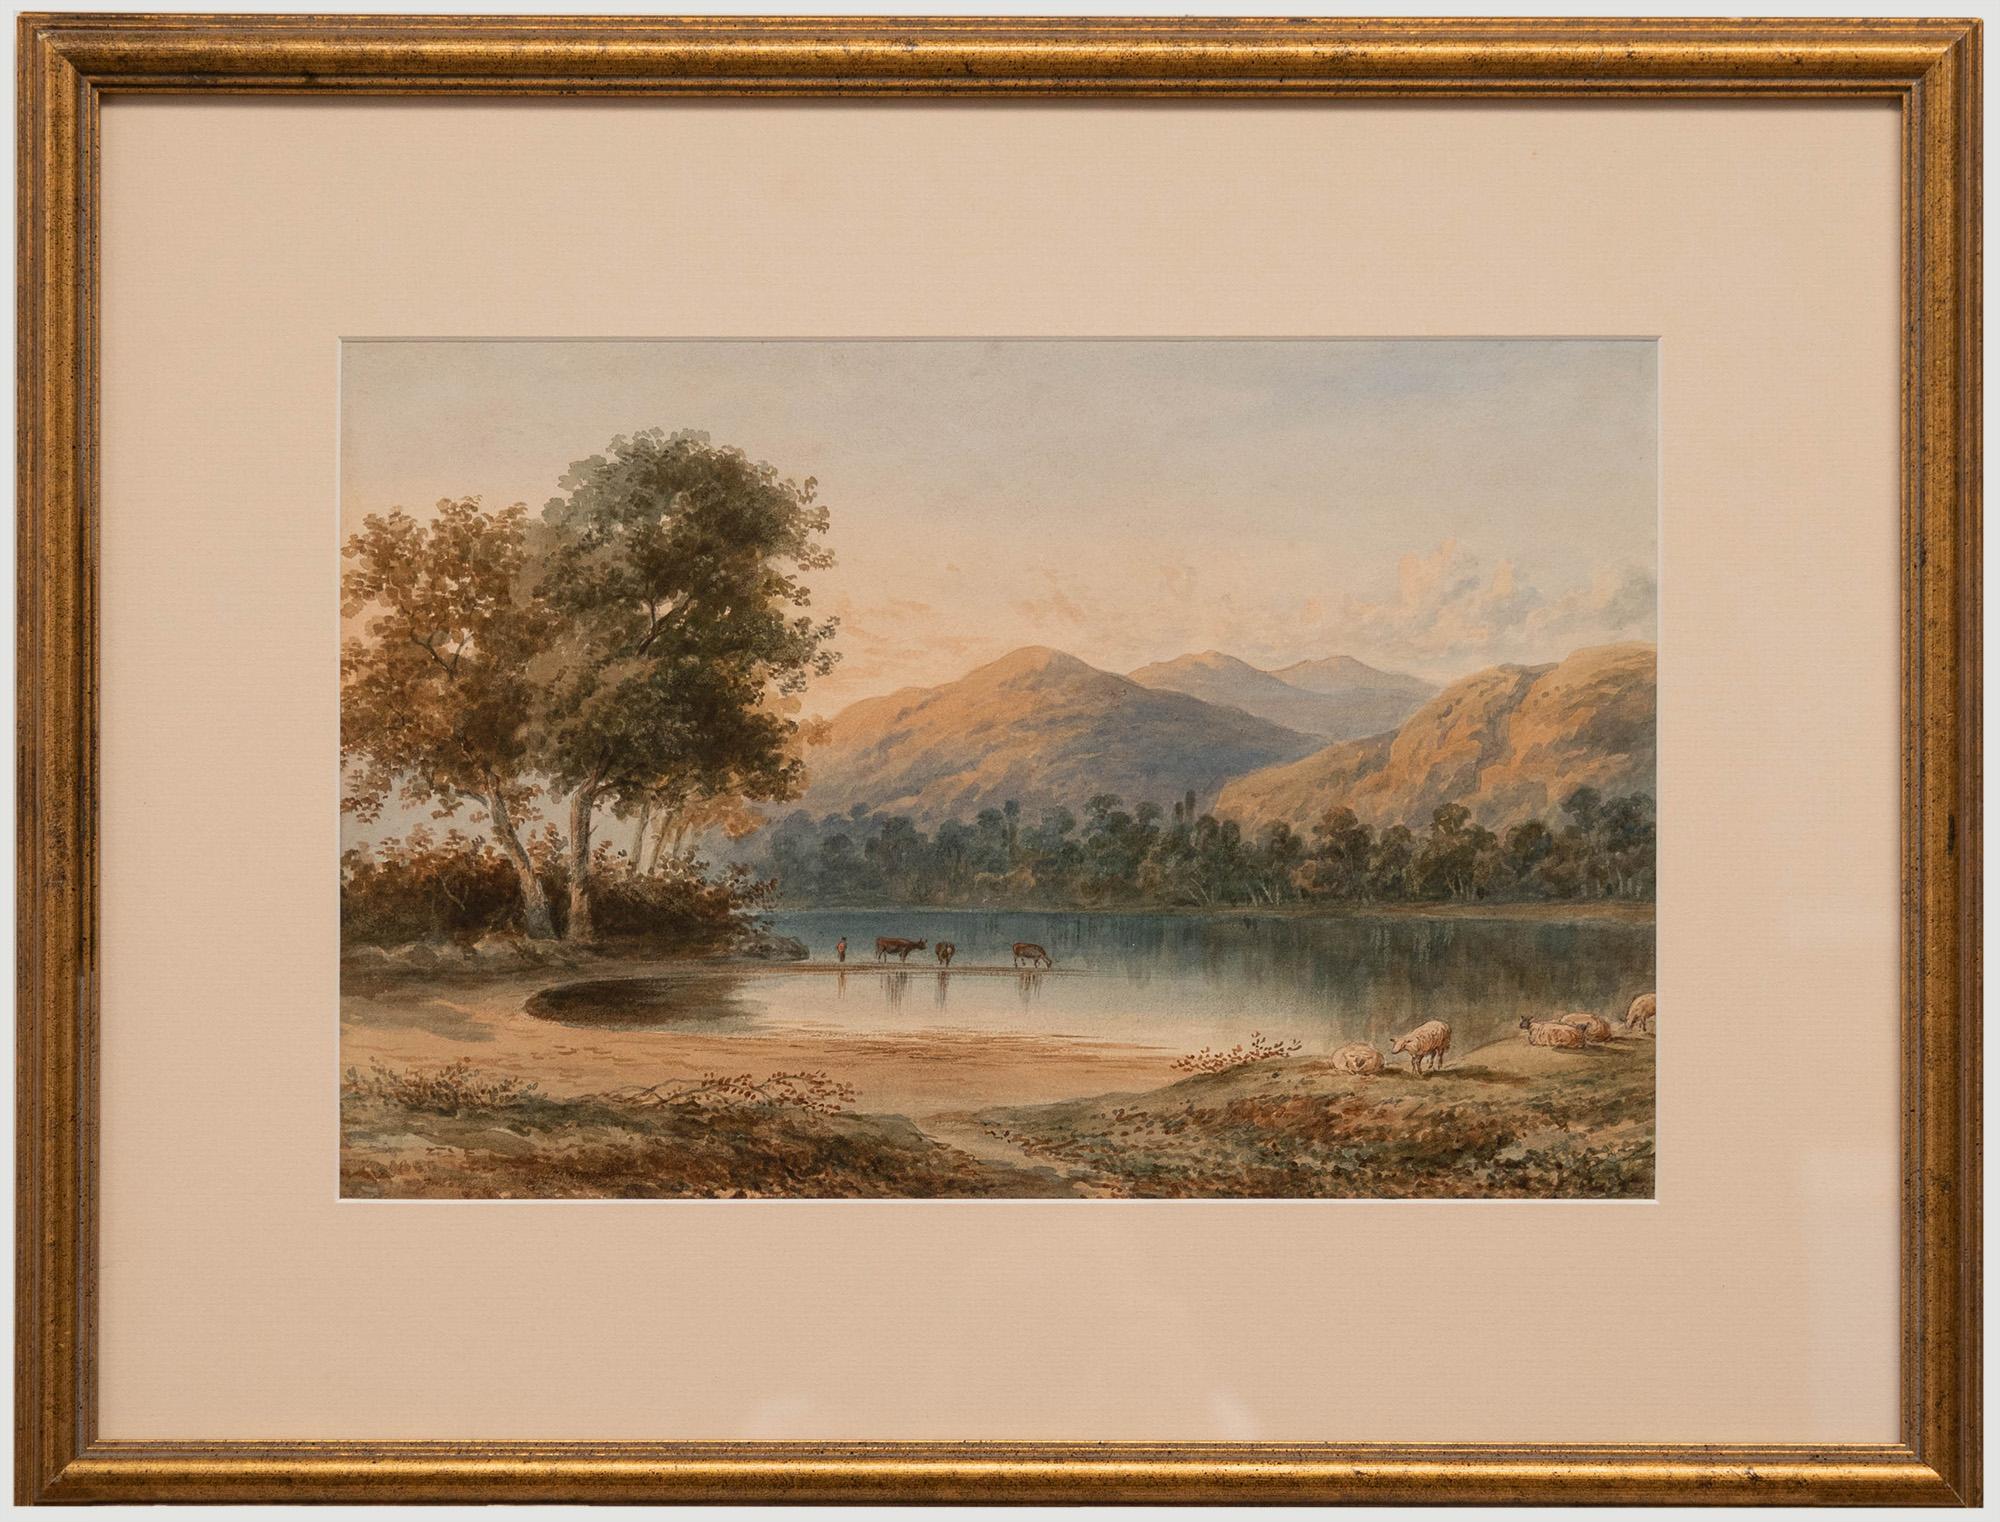 Unknown Landscape Art - English School 19th Century Watercolour - Cattle Watering by a Loch